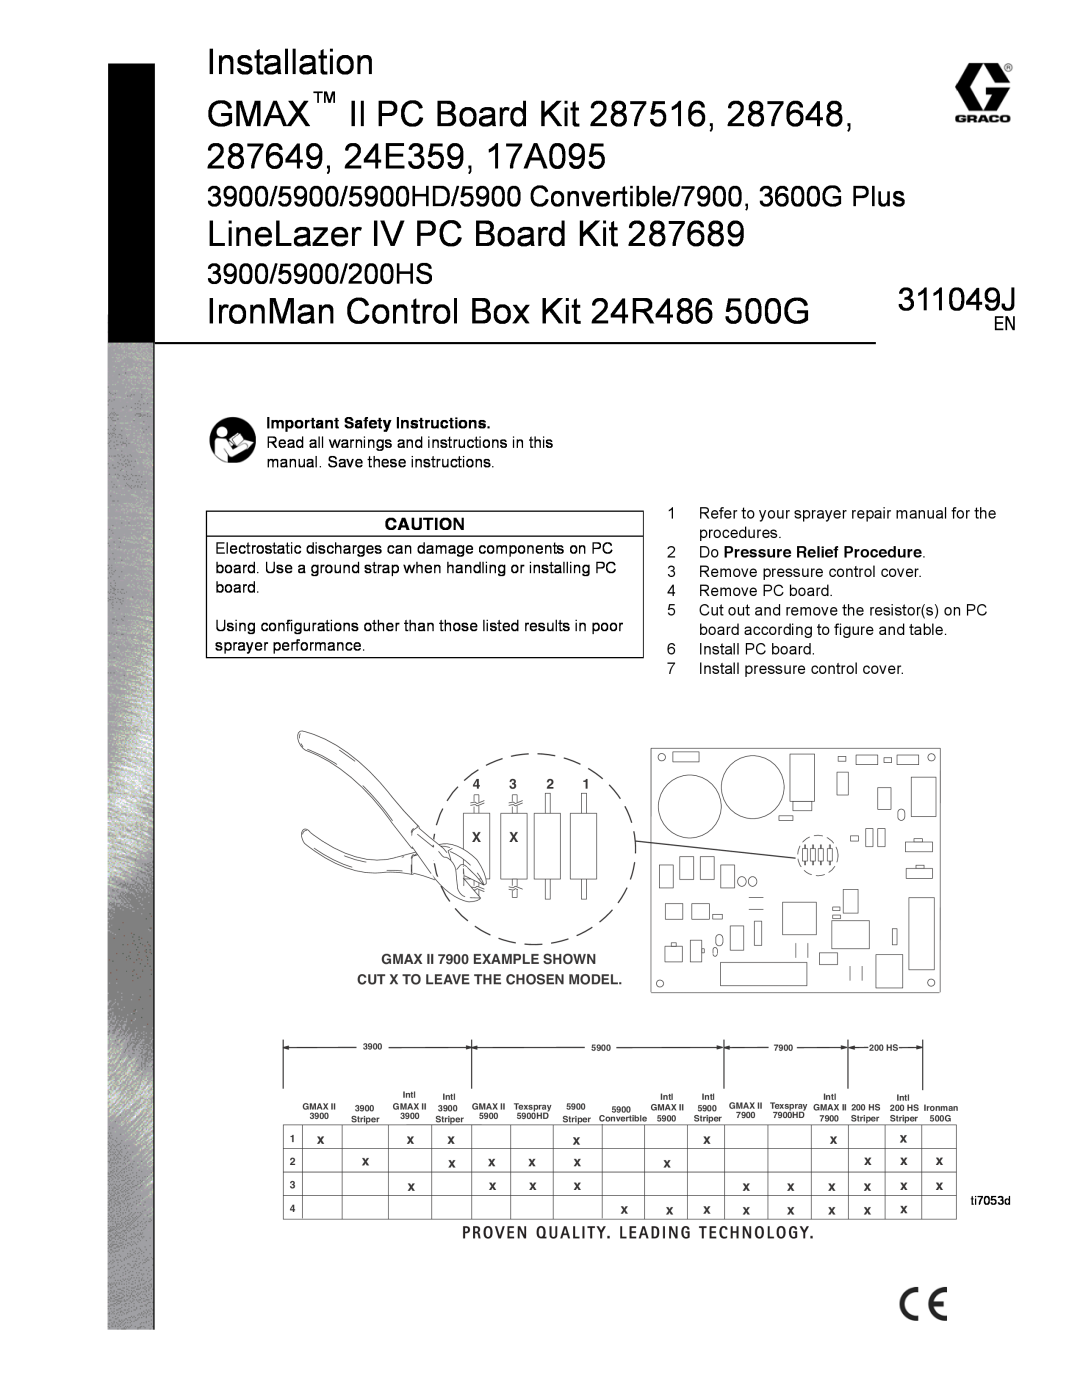 Graco 3900/5900/200HS, 500G, 287649, 287516 important safety instructions Installation, LineLazer IV PC Board Kit, 311049J 